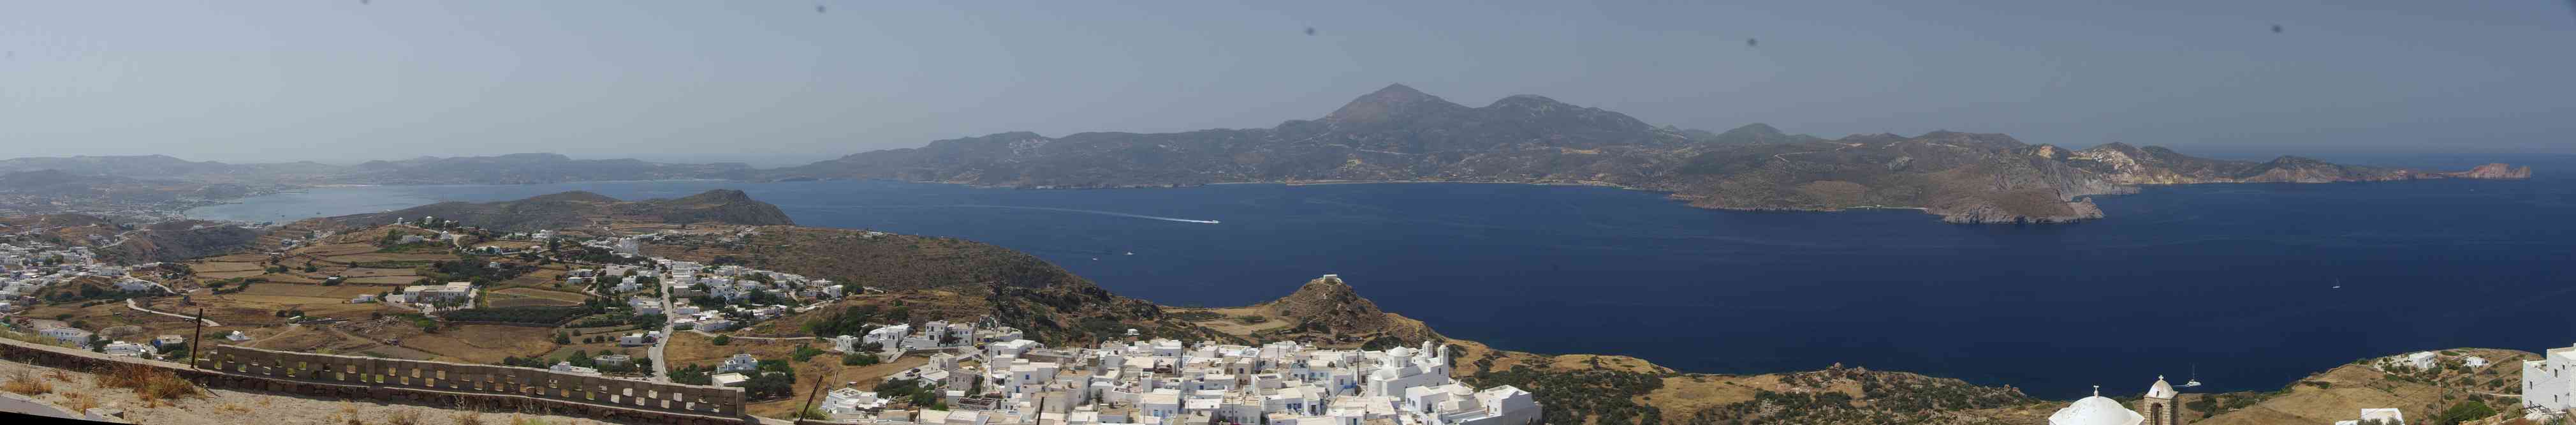 Milo (Ν. Μήλος), Plaka (Πλάκα) (vue panoramique depuis le kastro)